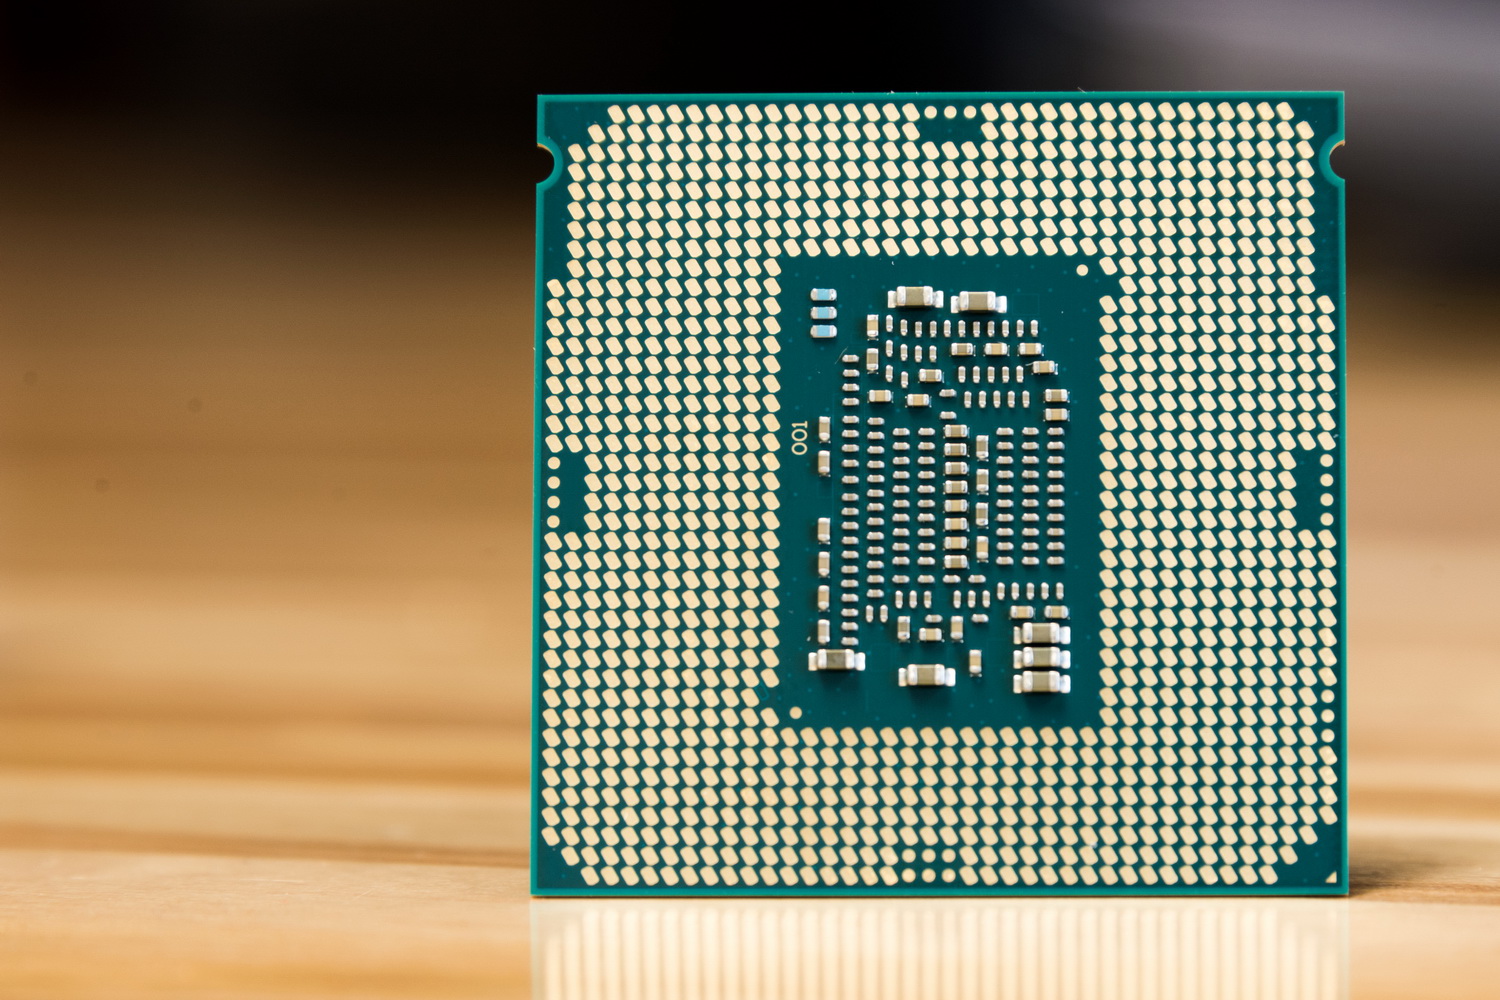  Intel Core i3 vs. Core i5 CPUs